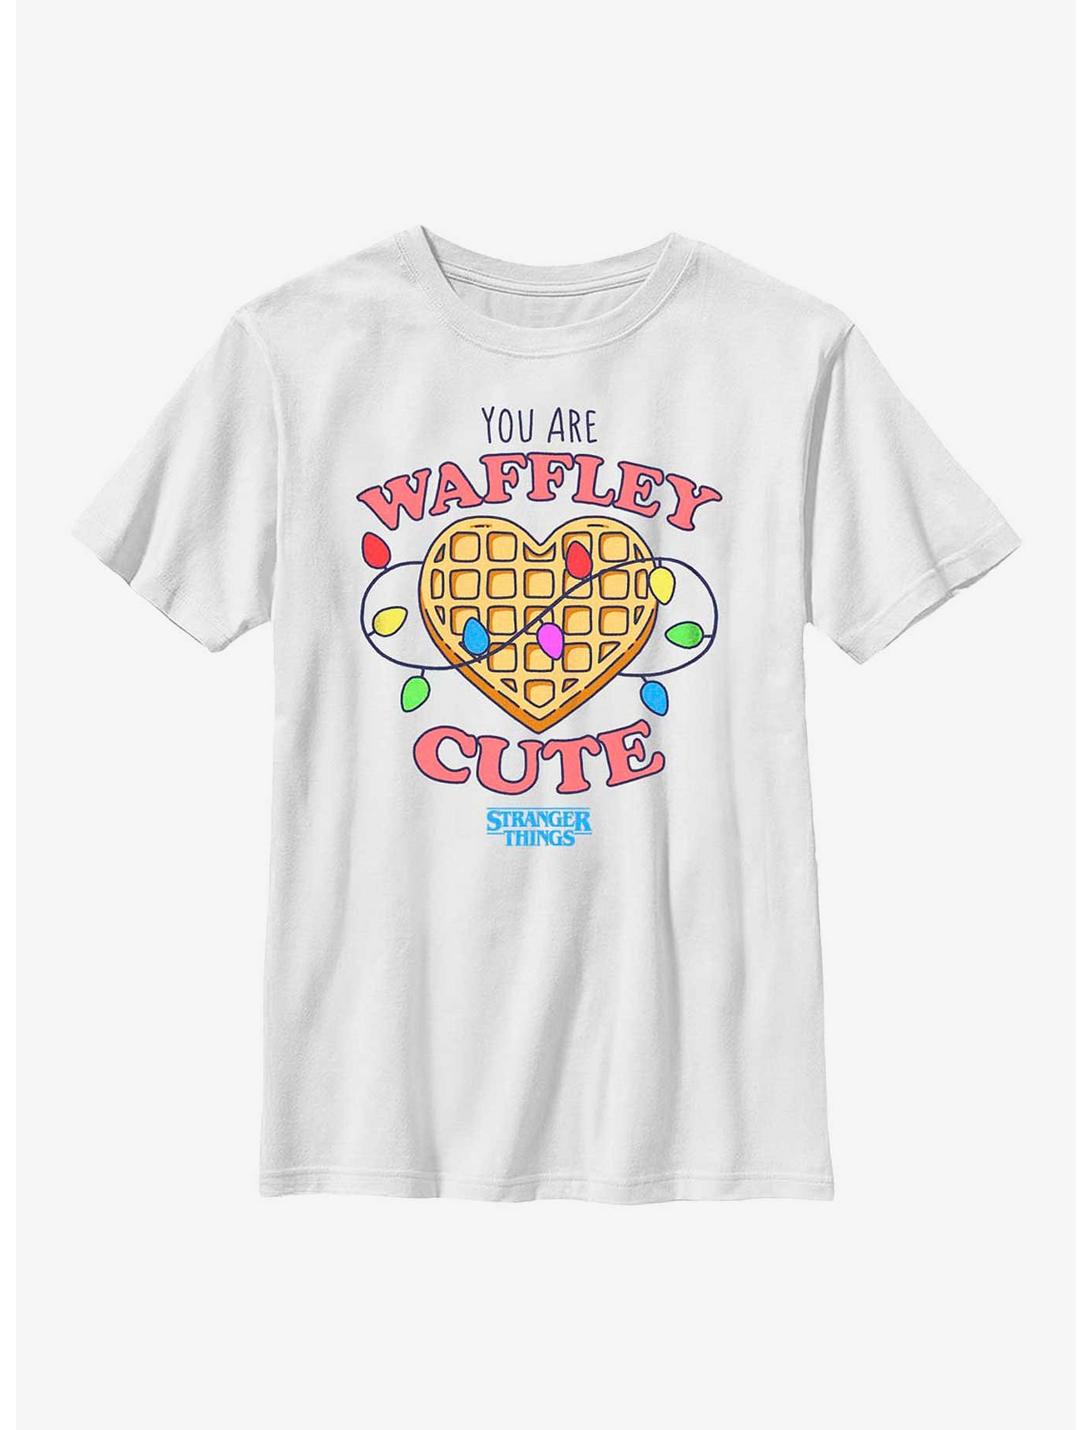 Stranger Things Heart Waffley Cute Youth T-Shirt, WHITE, hi-res